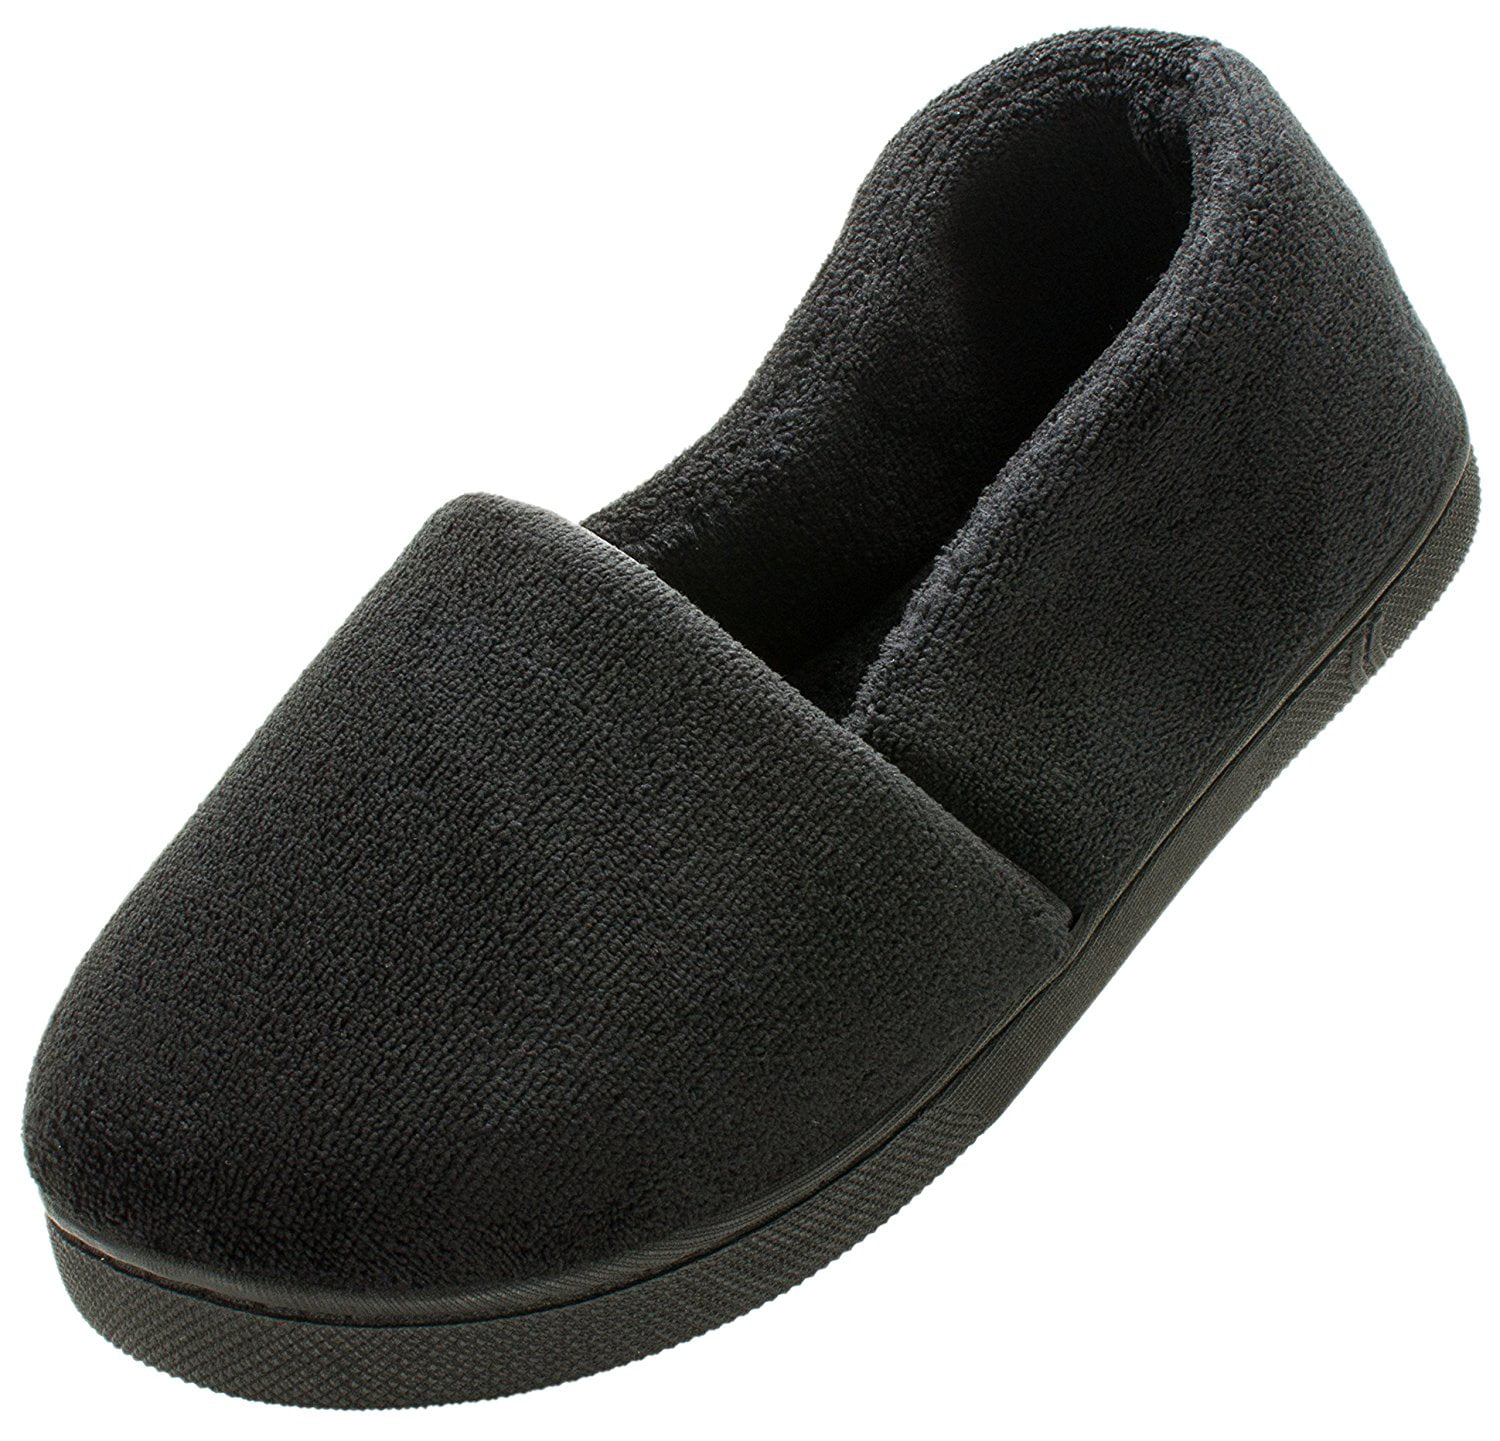 heel cushion slippers